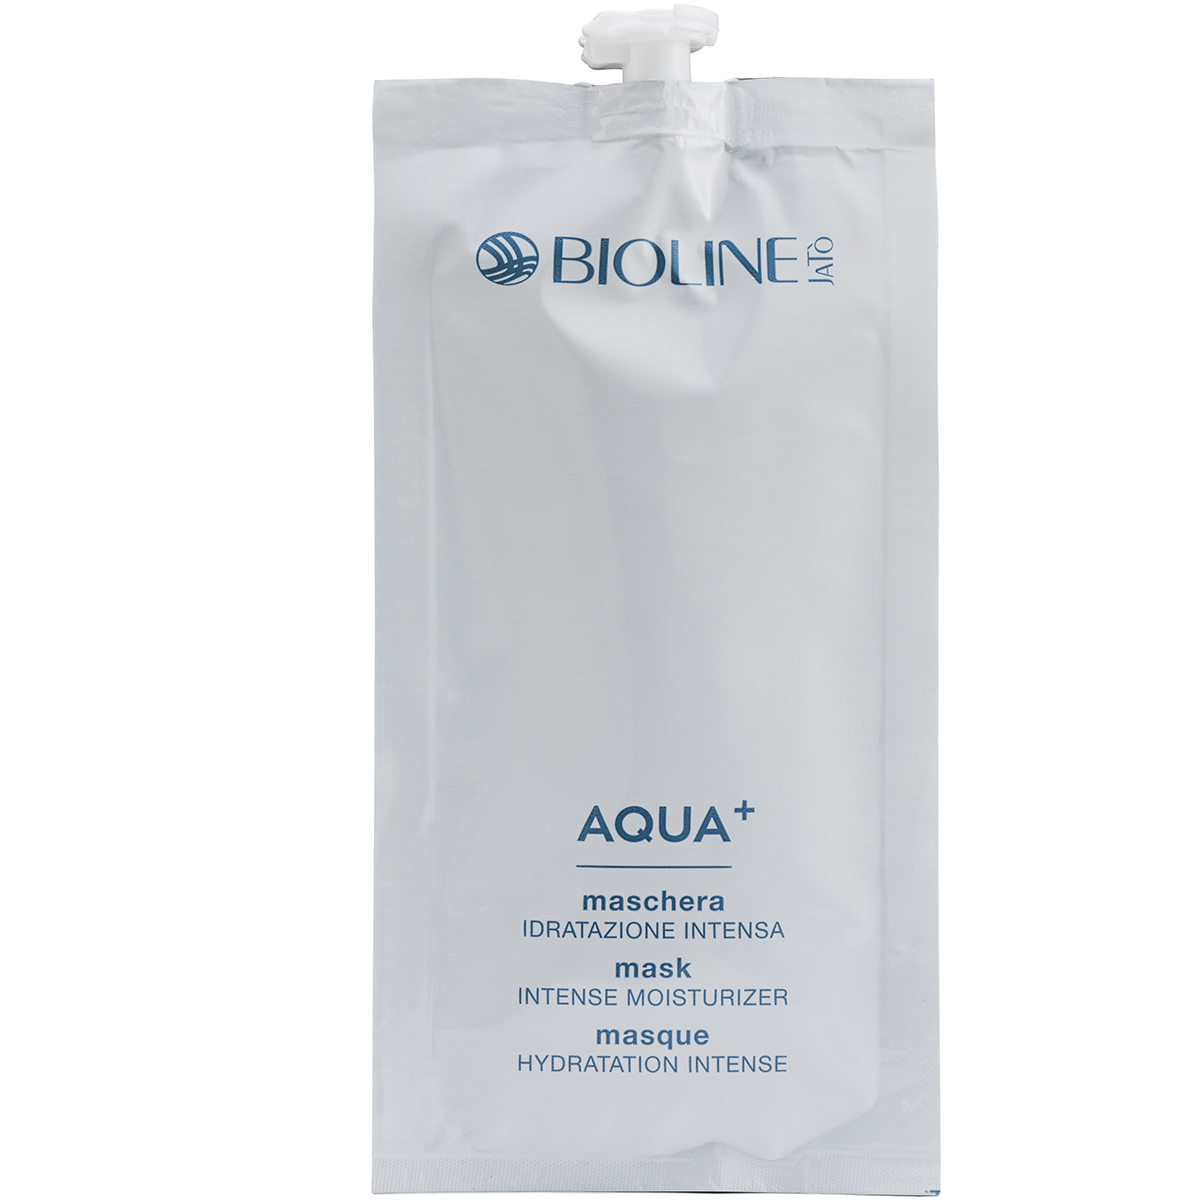 Bioline Aqua+ Intense Moisturizer Mask